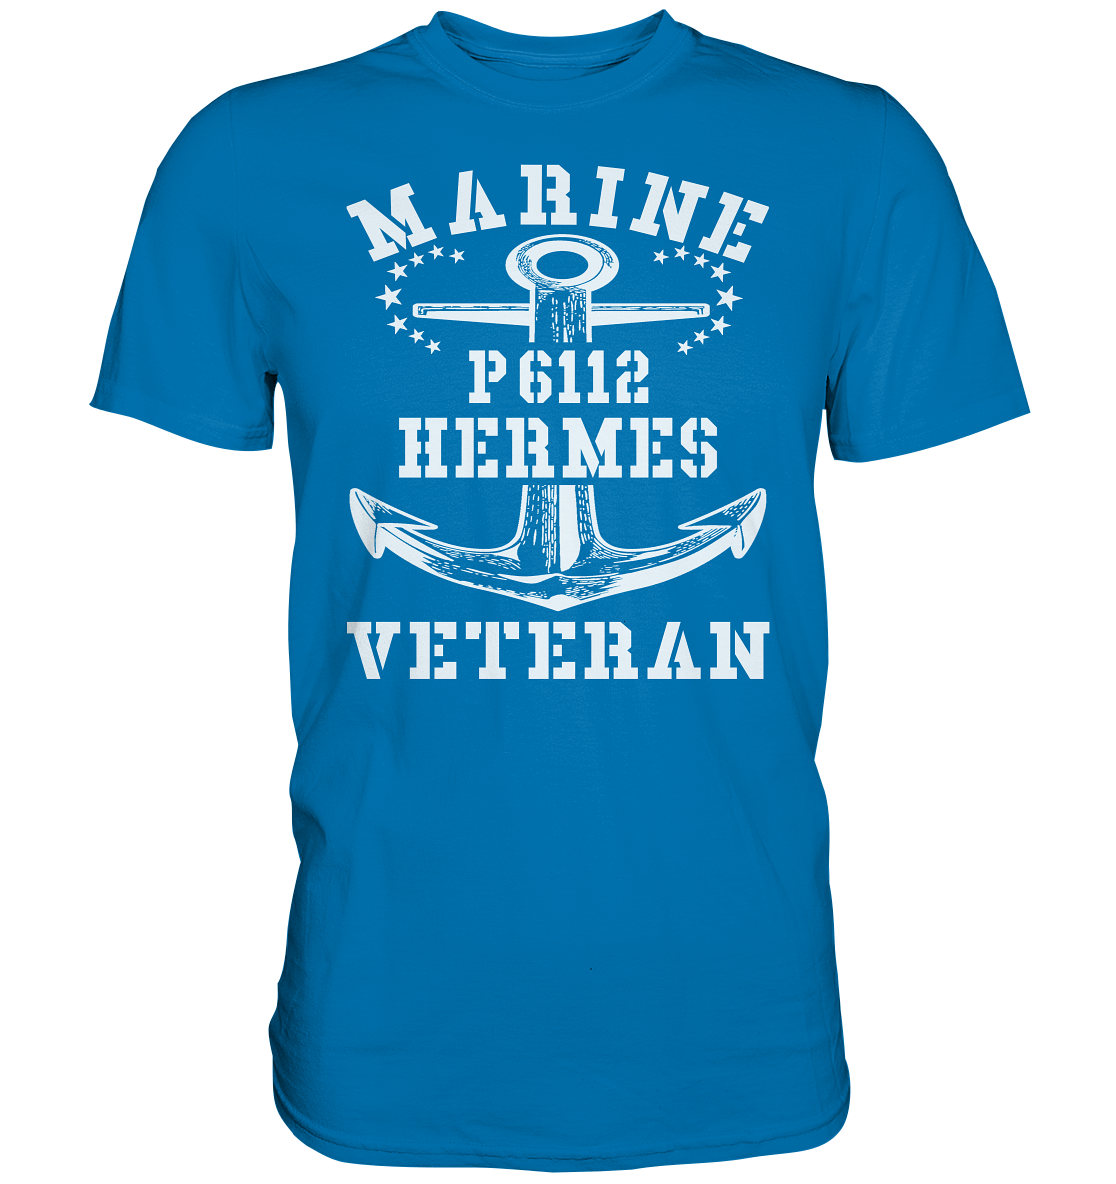 U-Jagdboot P6112 HERMES Marine Veteran - Premium Shirt